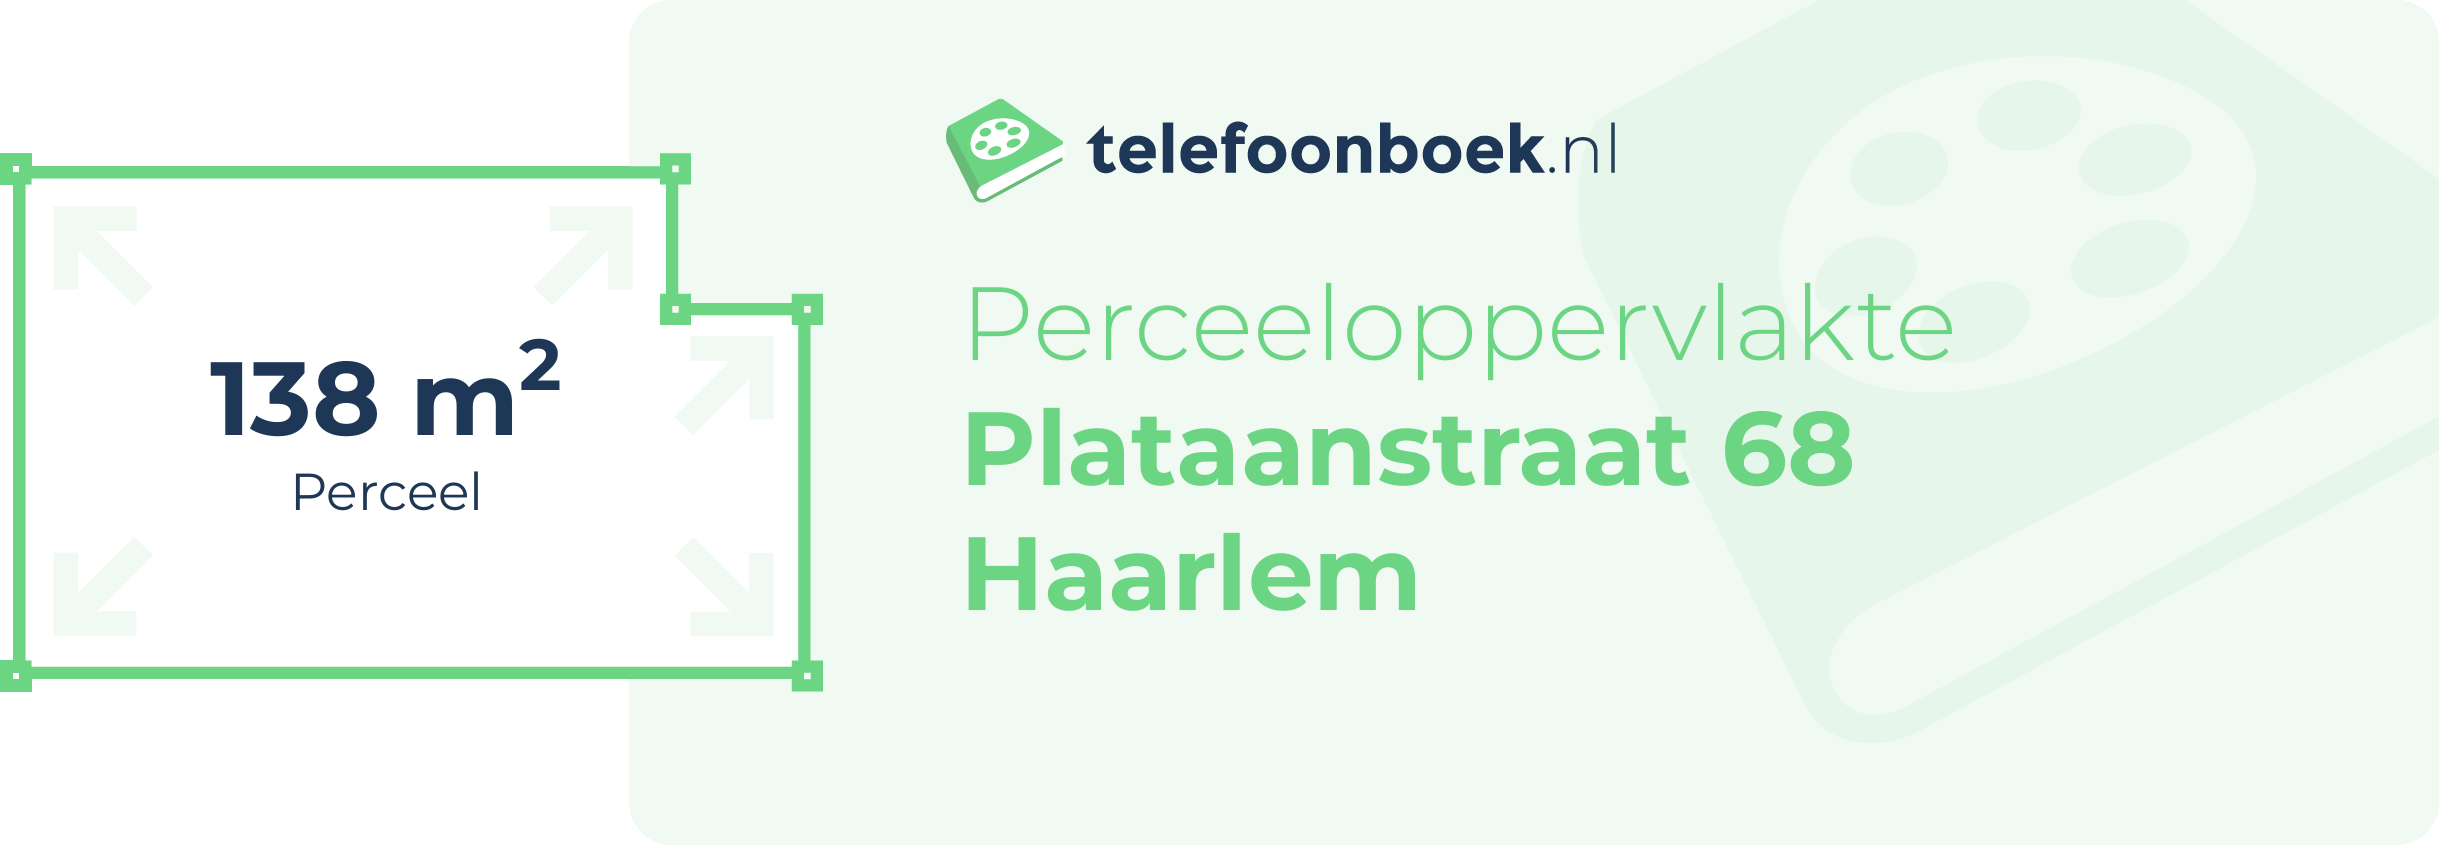 Perceeloppervlakte Plataanstraat 68 Haarlem